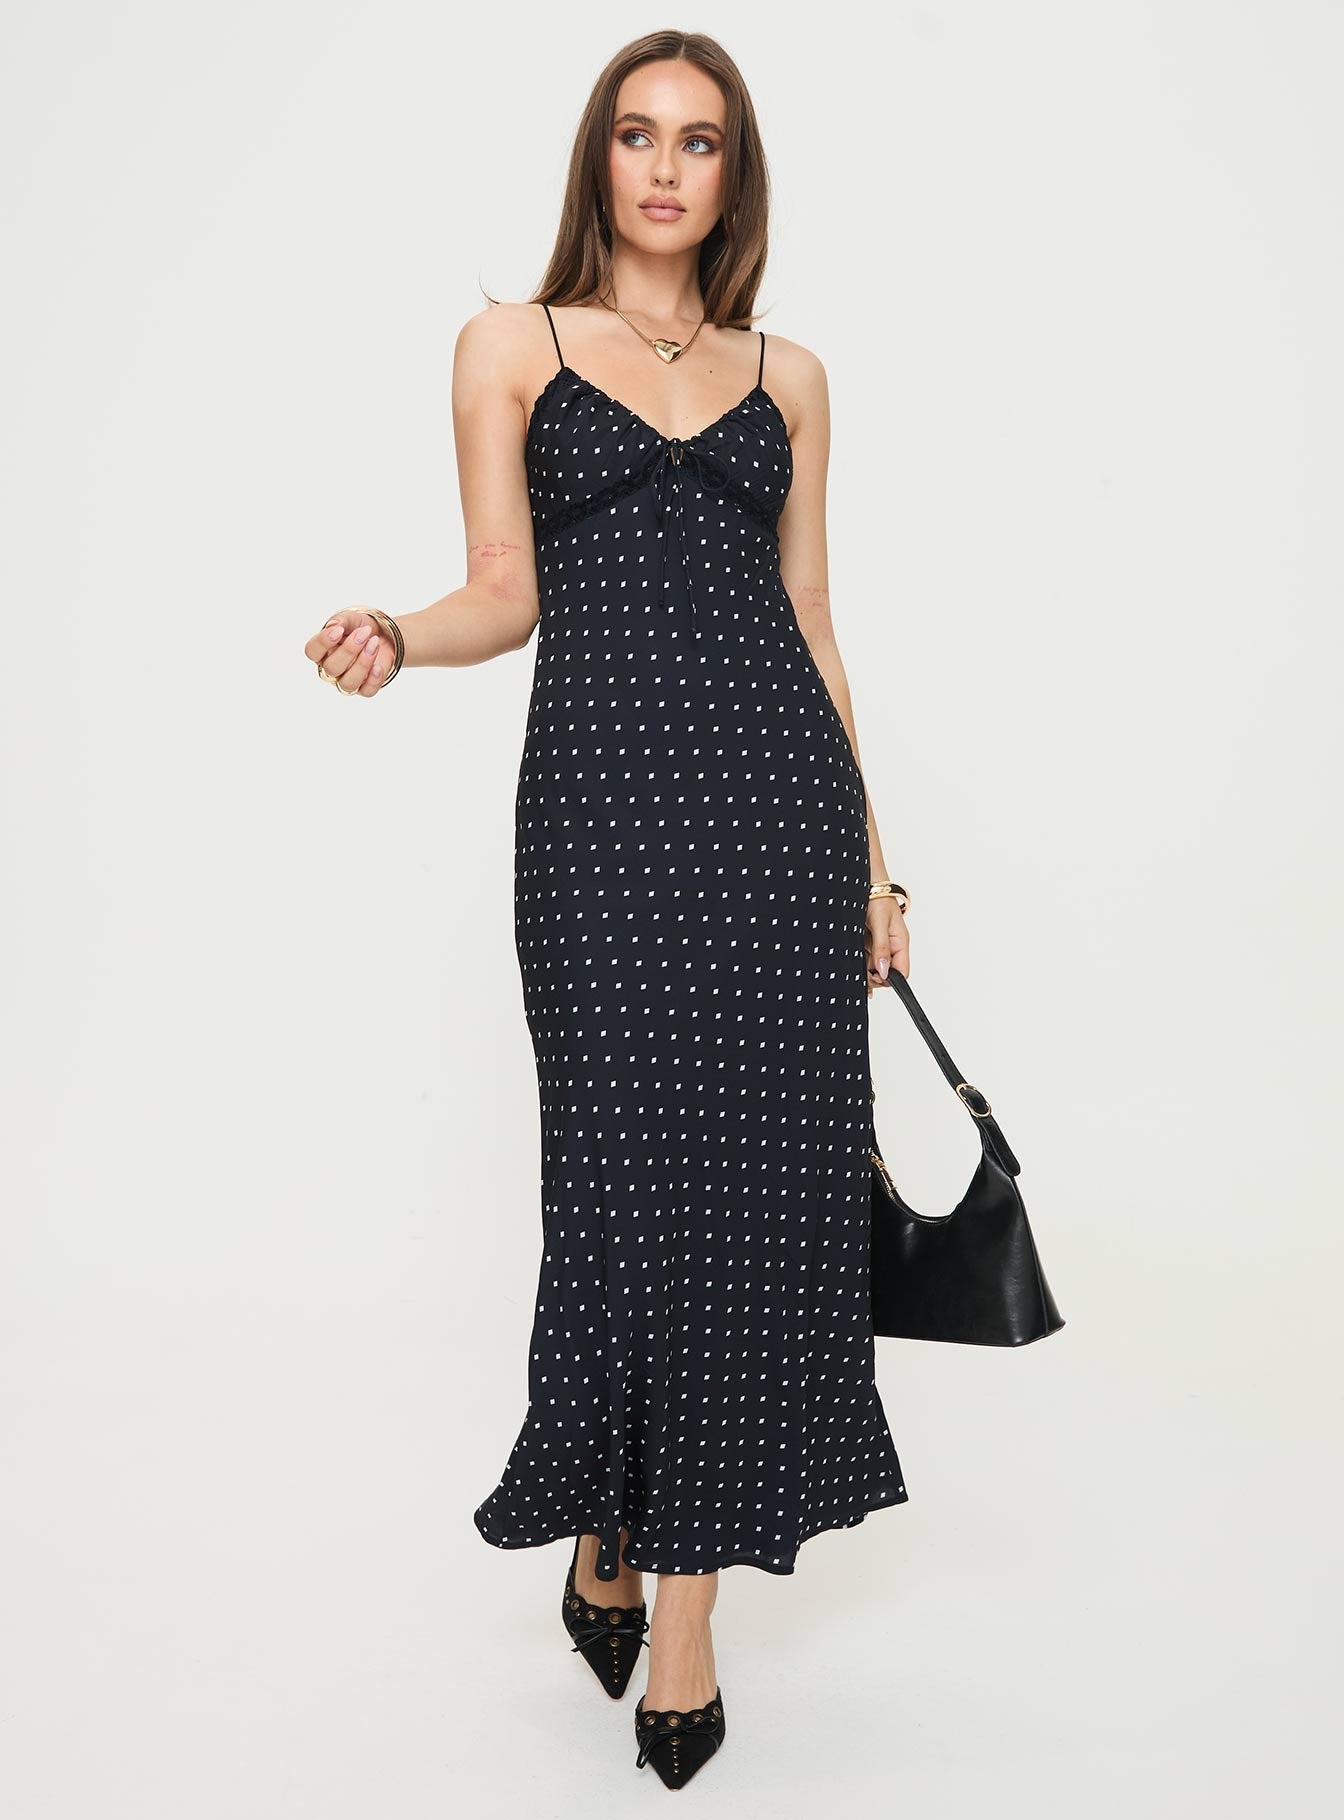 Shop Formal Dress - Emily Maxi Dress Black Polka Dot sixth image